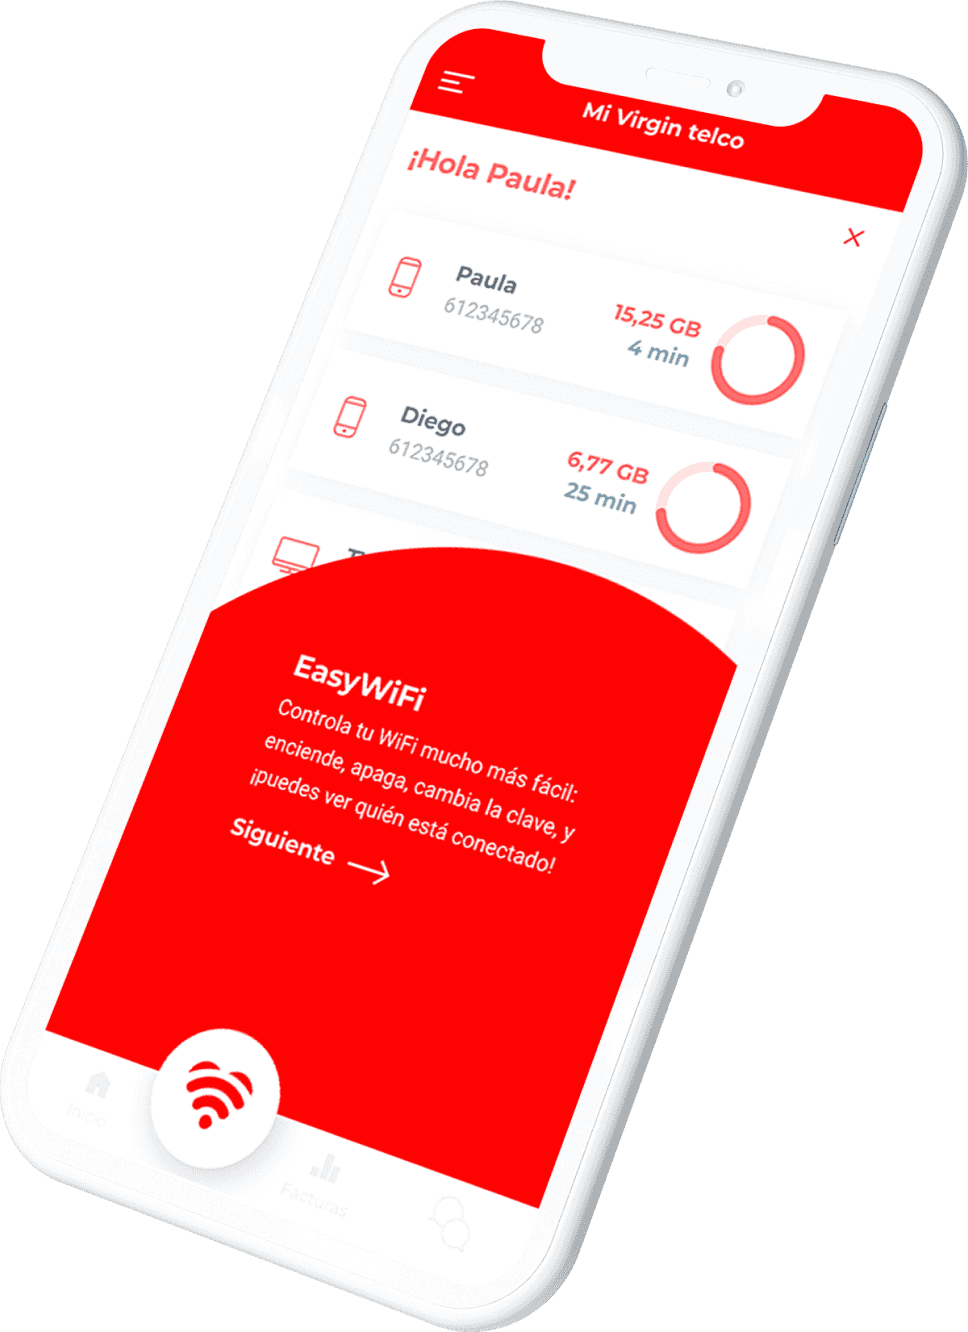 Virgin Telco mockup easy wifi mugikorra